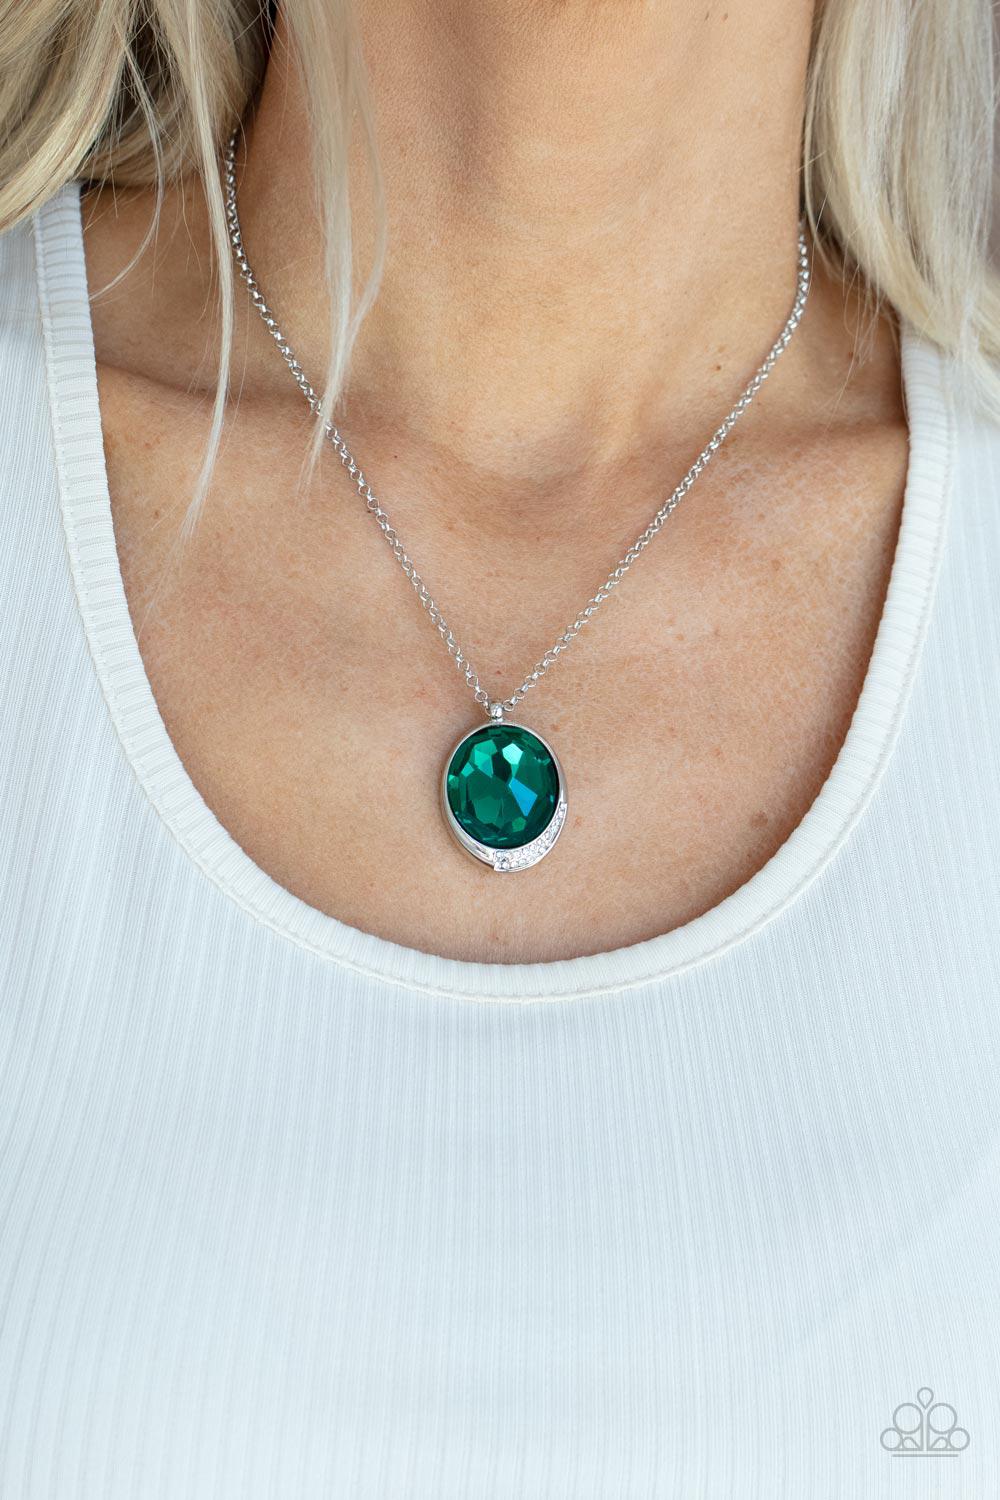 Fashion Finale Green Rhinestone Necklace - Paparazzi Accessories- model - CarasShop.com - $5 Jewelry by Cara Jewels